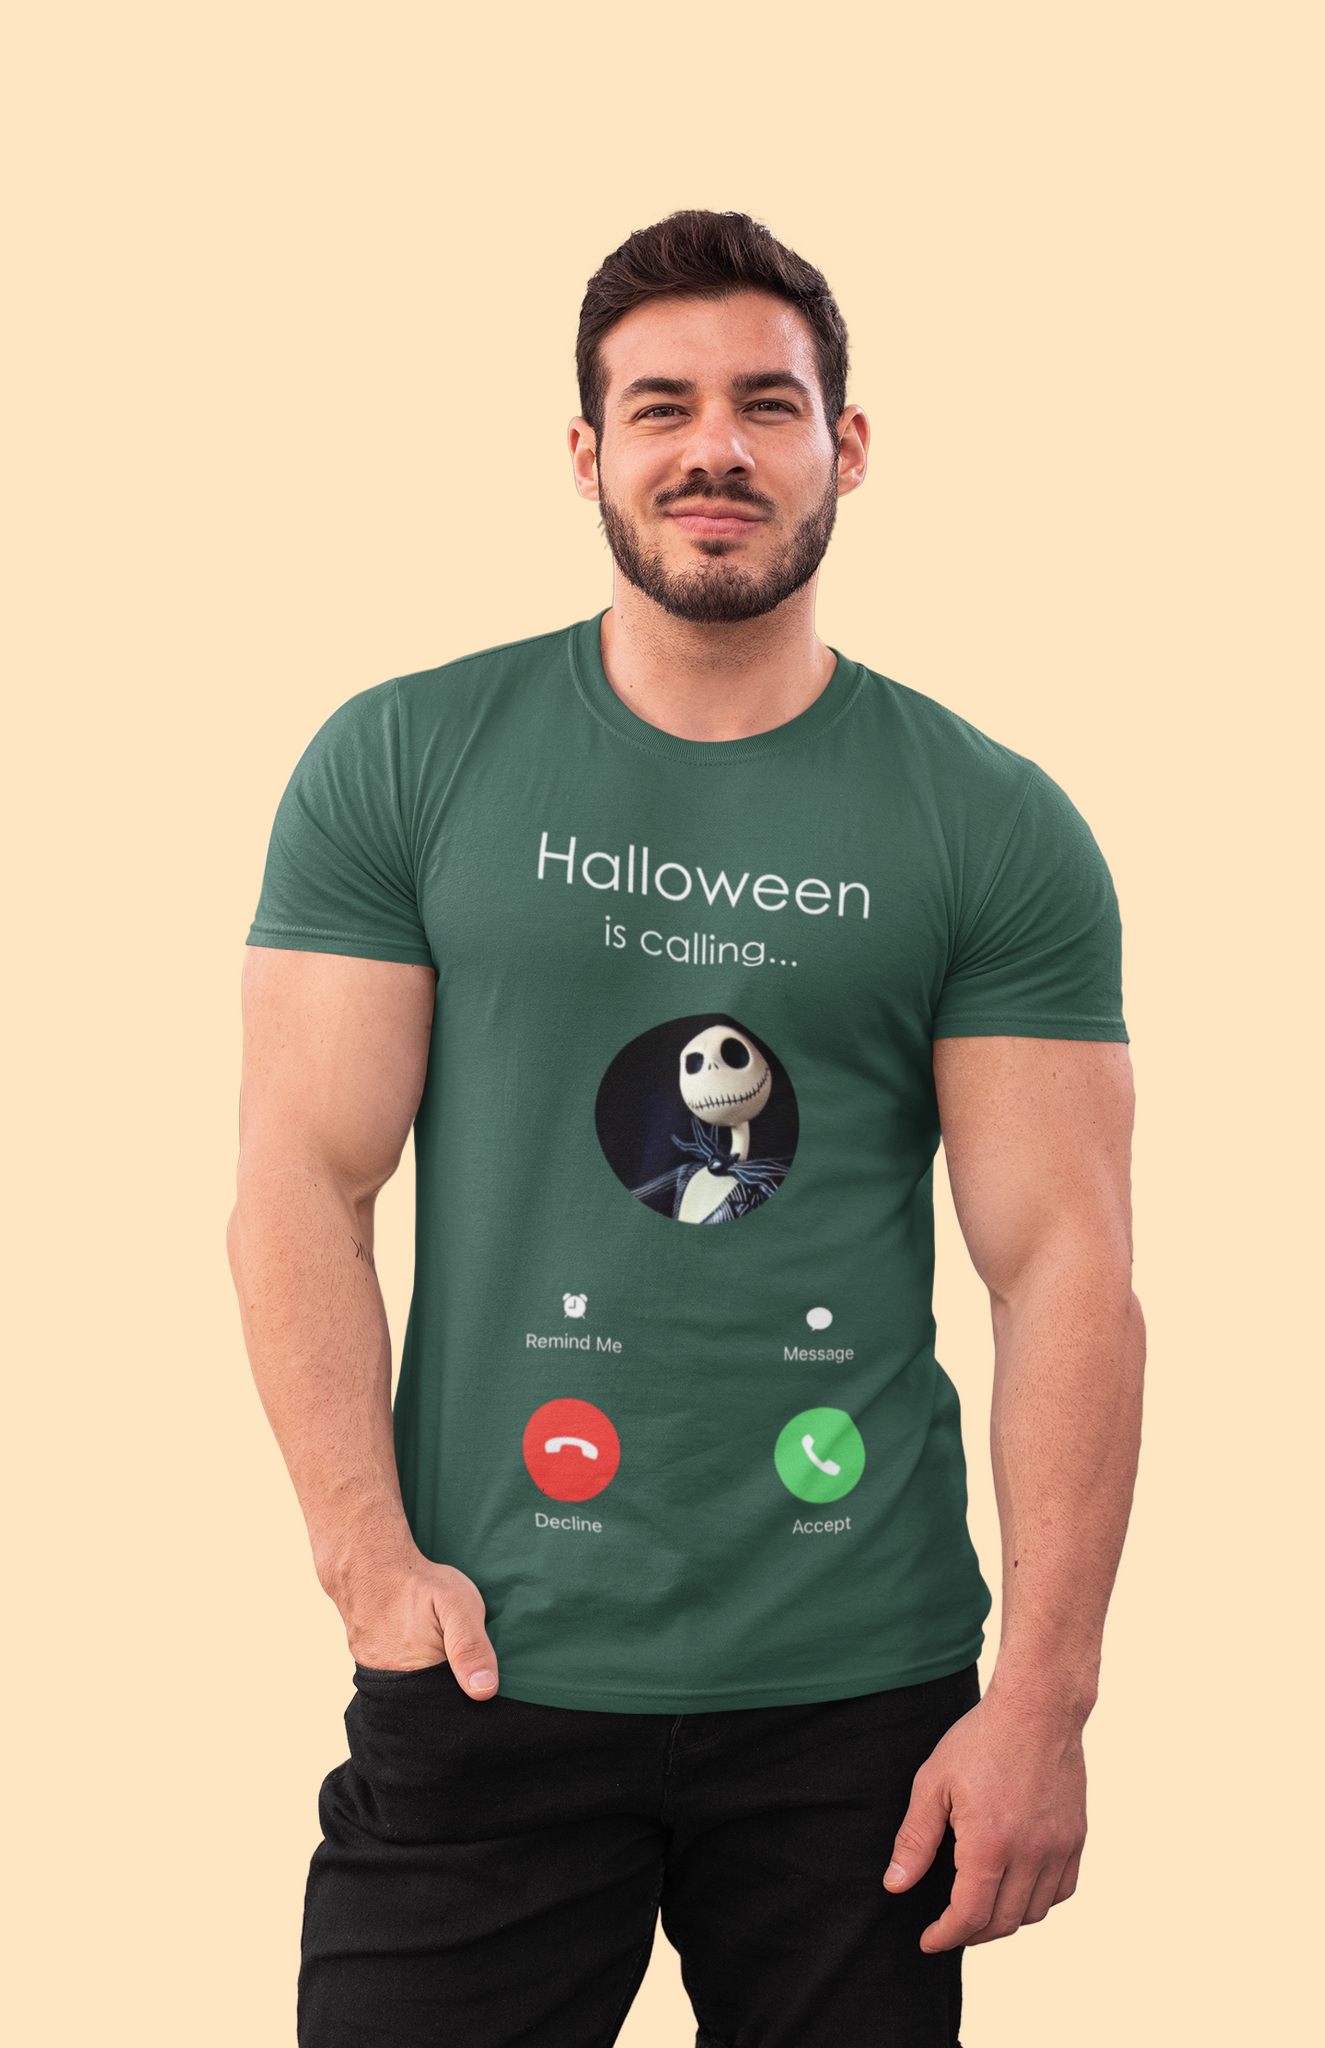 Nightmare Before Christmas T Shirt, Jack Skellington T Shirt, Halloween Is Calling Tshirt, Halloween Gifts